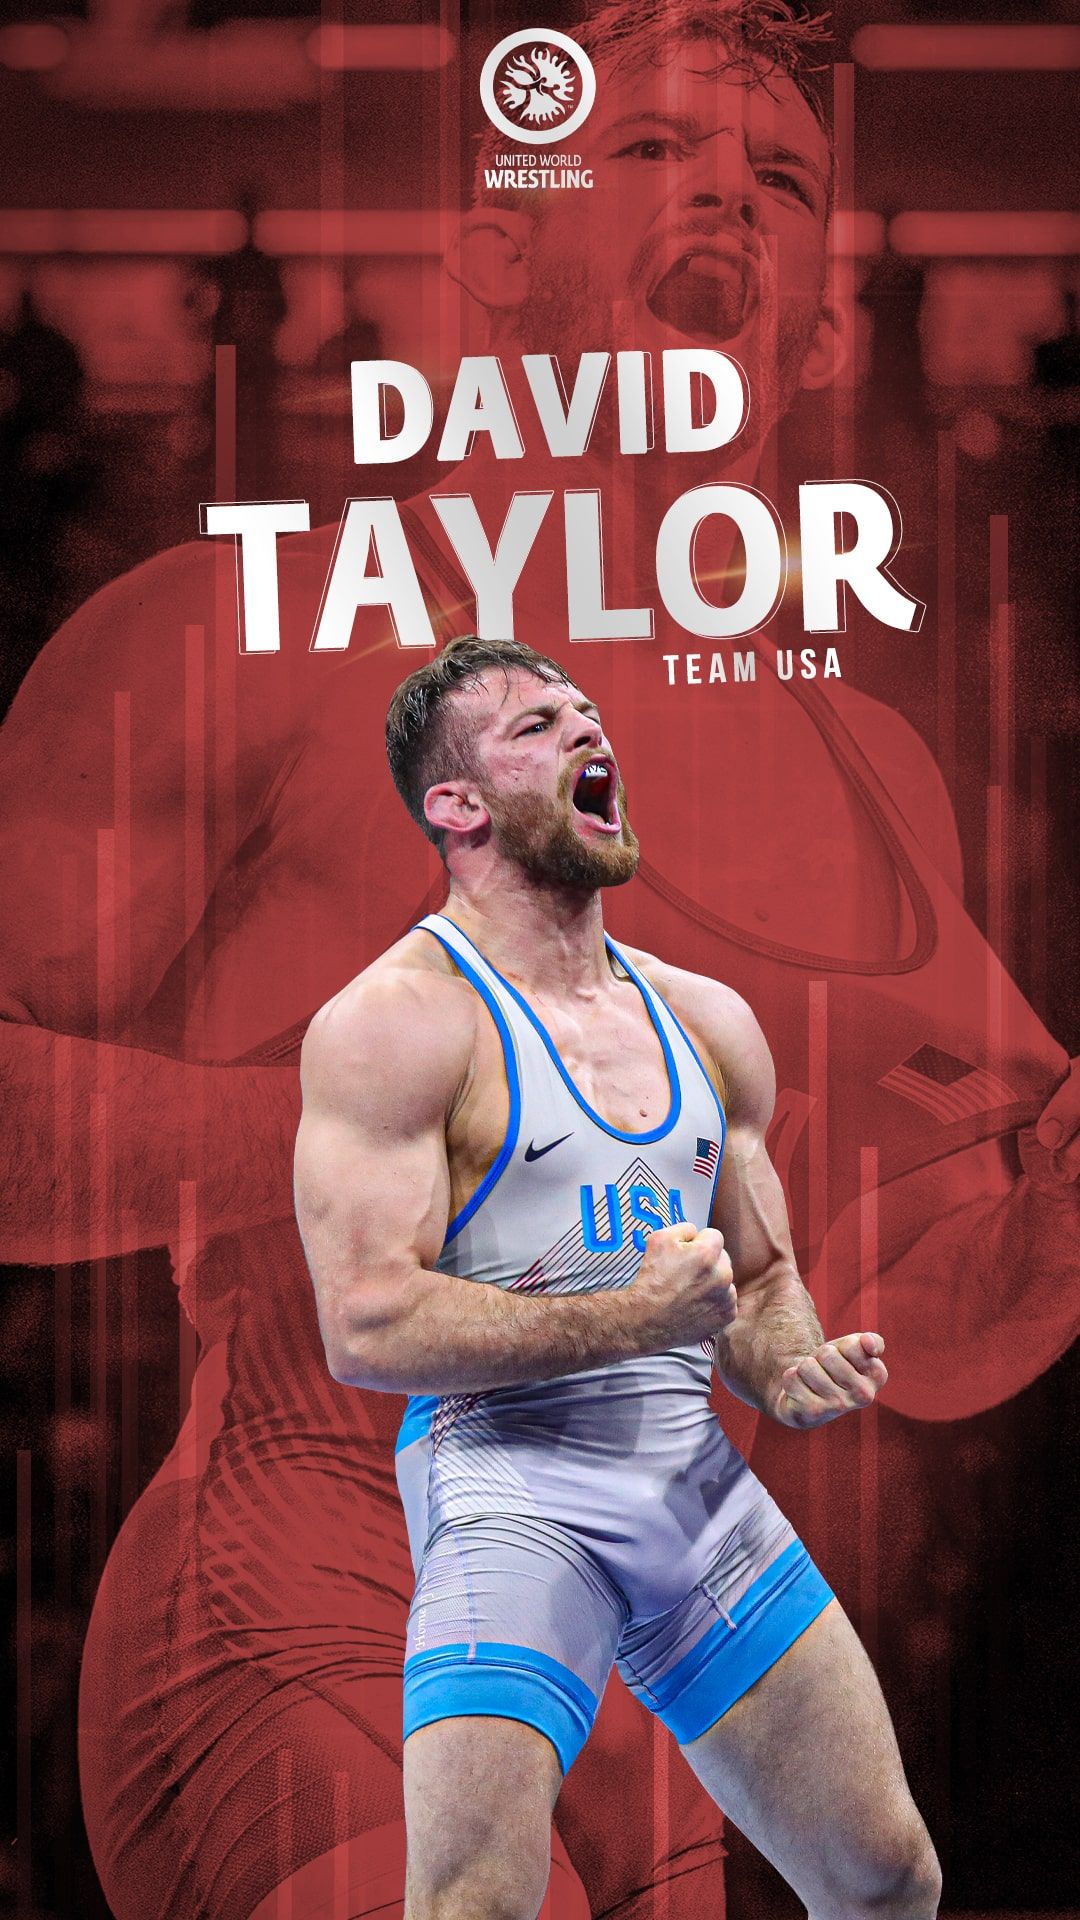 David Taylor Phone Wallpaper. Olympic wrestling, Wrestling, Wrestling singlet